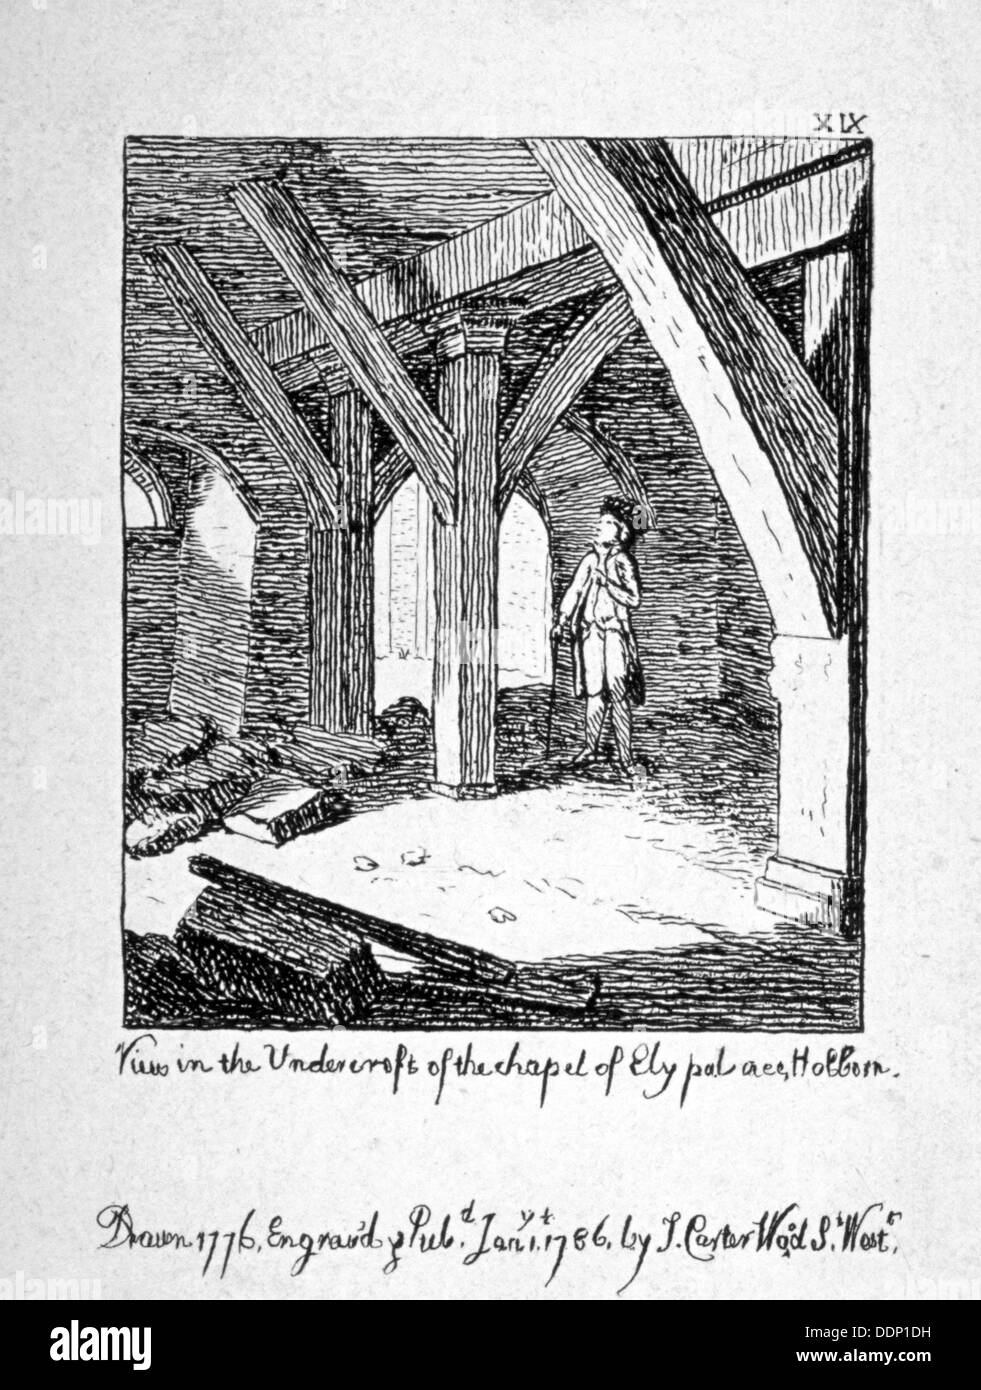 Vista la undercroft della chiesa di St Etheldreda, Ely Place, Holborn, Londra, 1786. Artista: John Carter Foto Stock